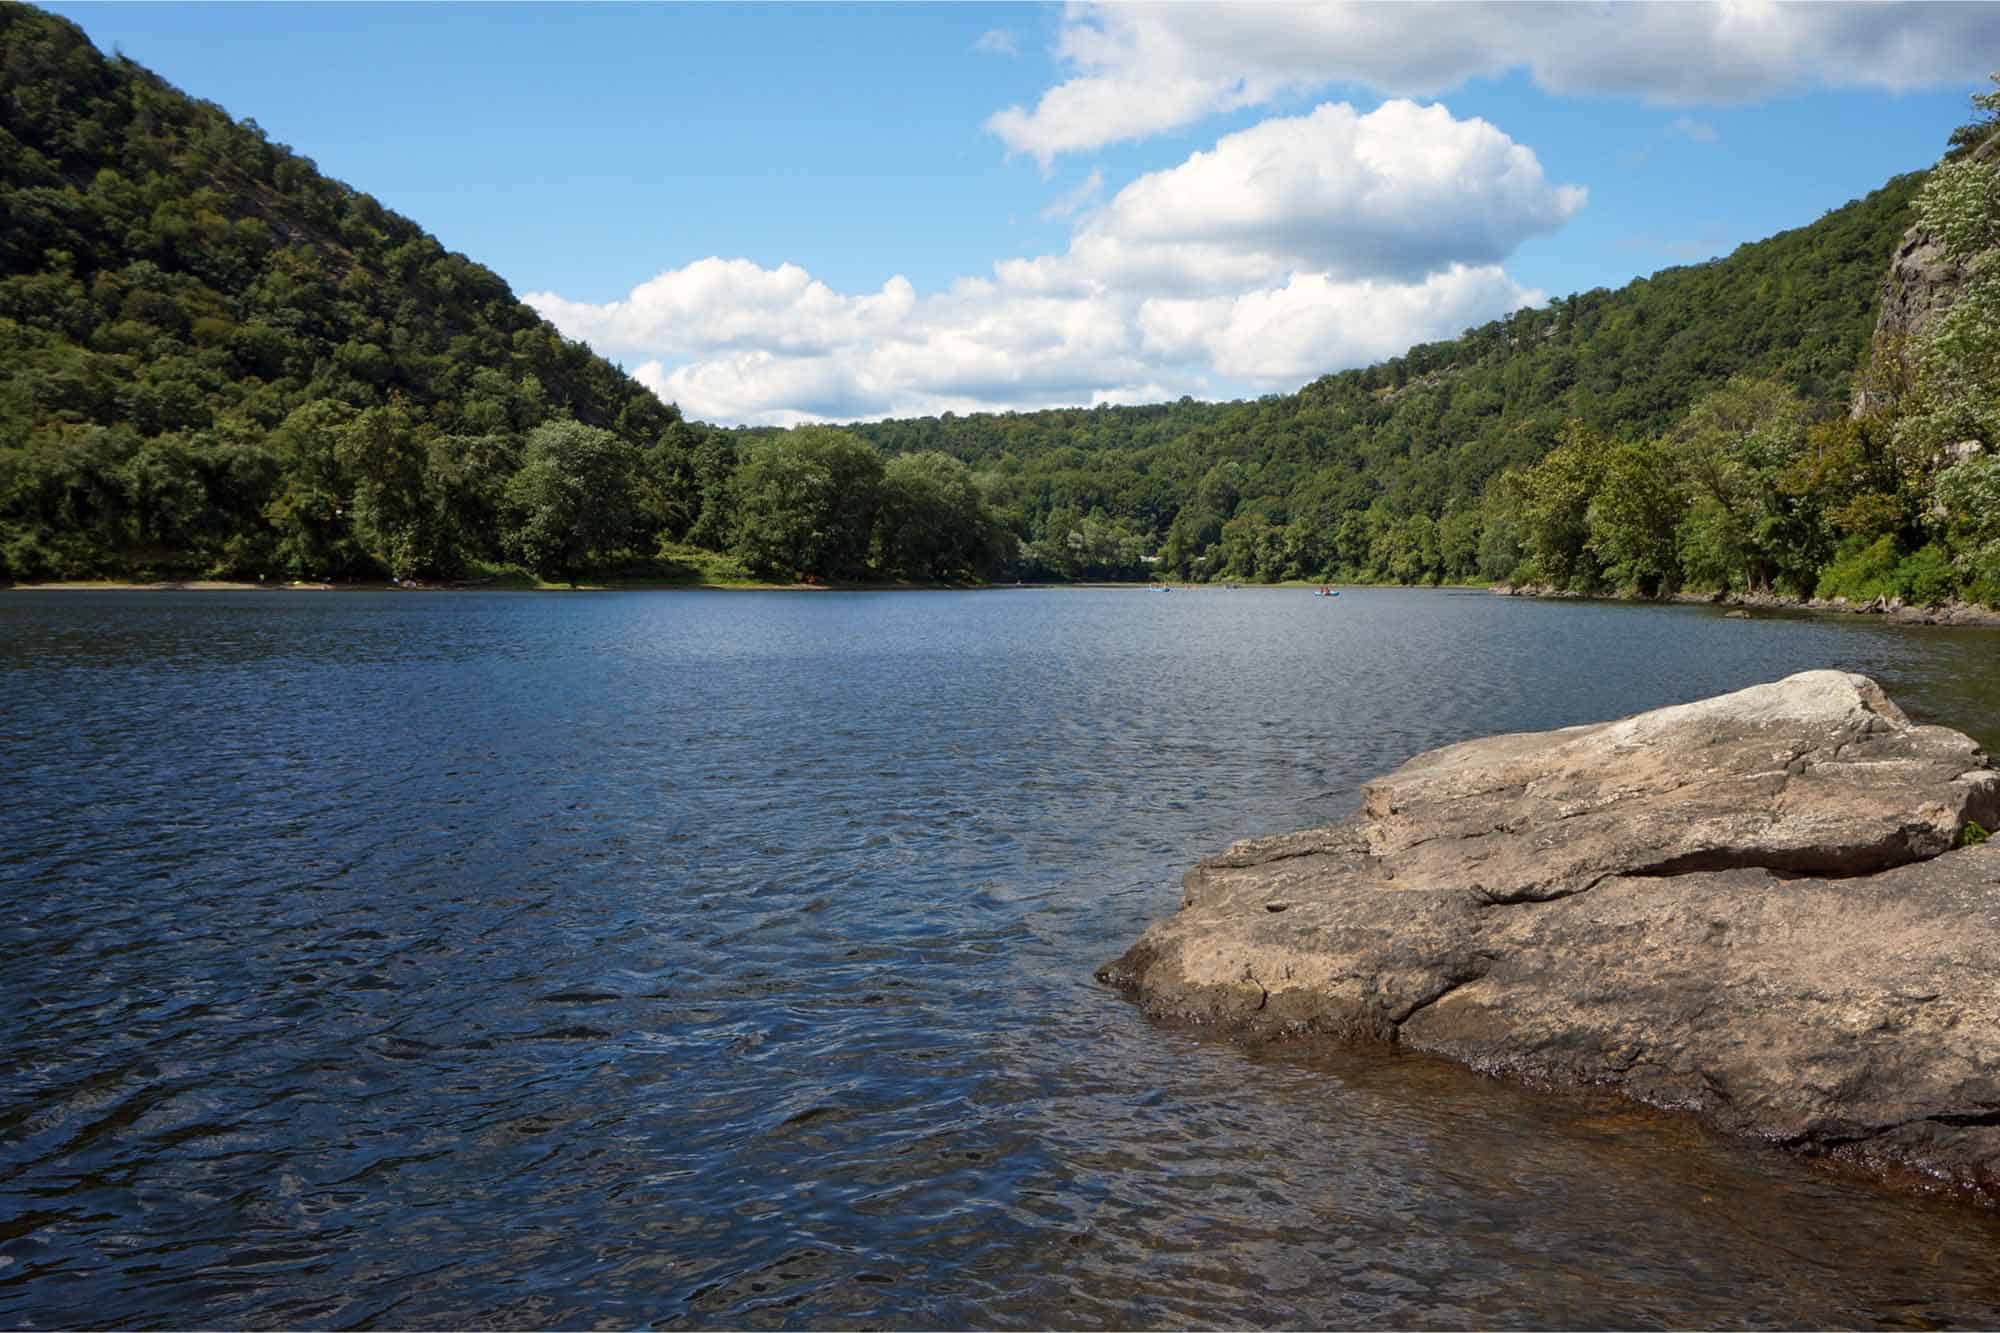 Big rock in lake between hills